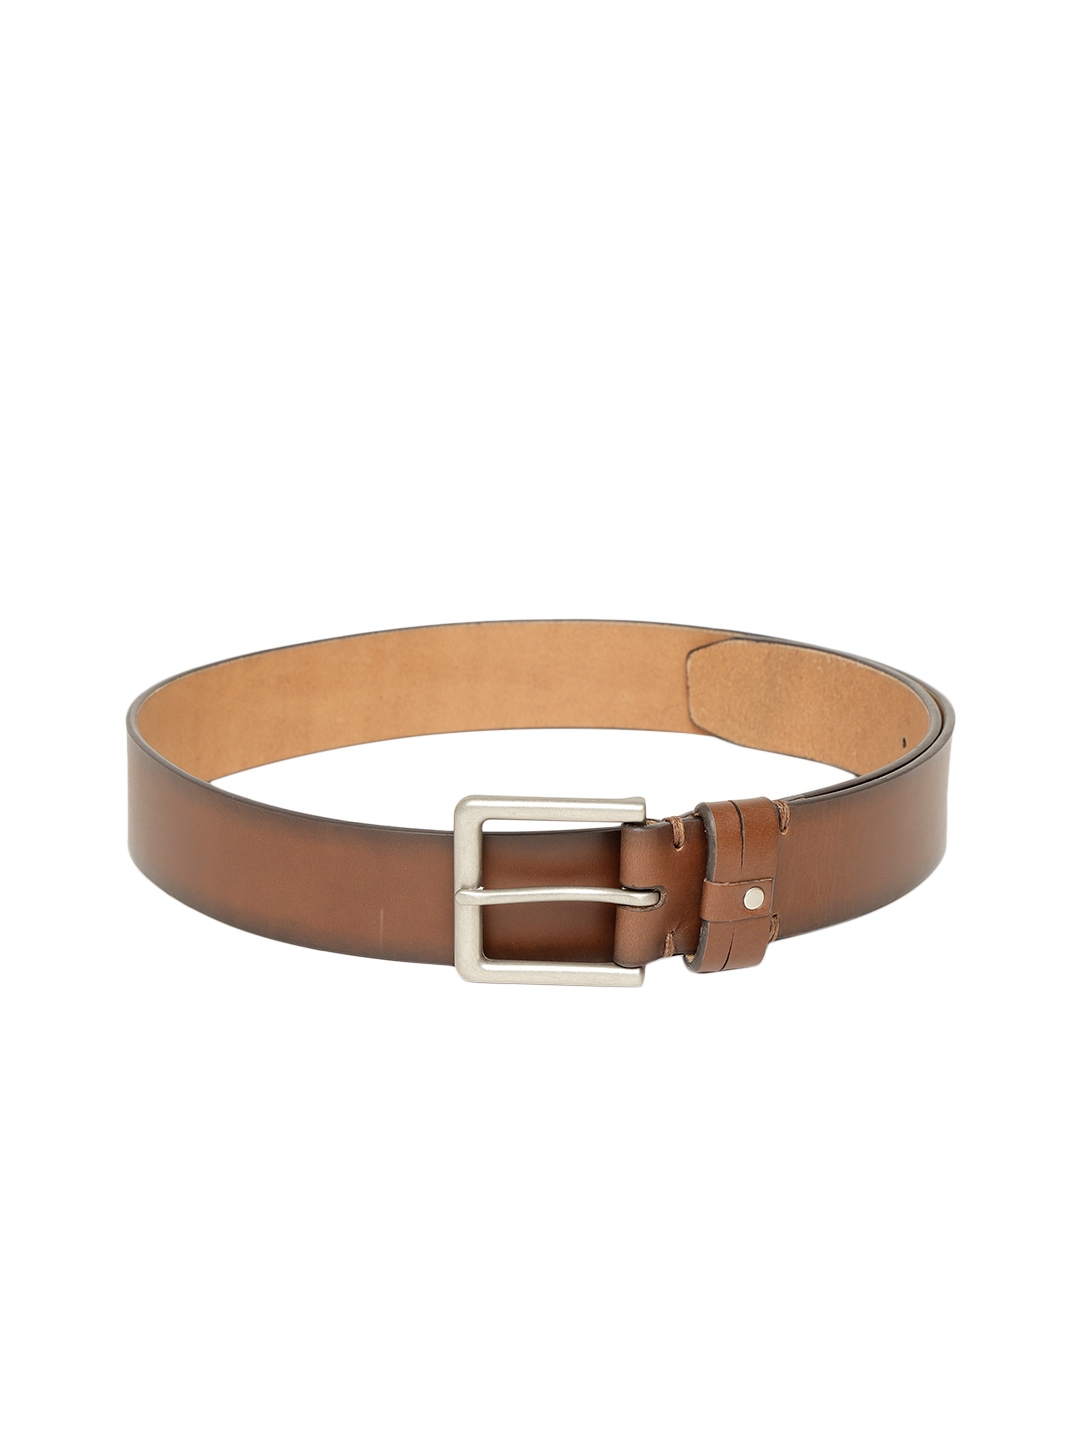 Buy U.S. Polo Assn. Men Brown Leather Belt - Belts for Men 3013403 | Myntra